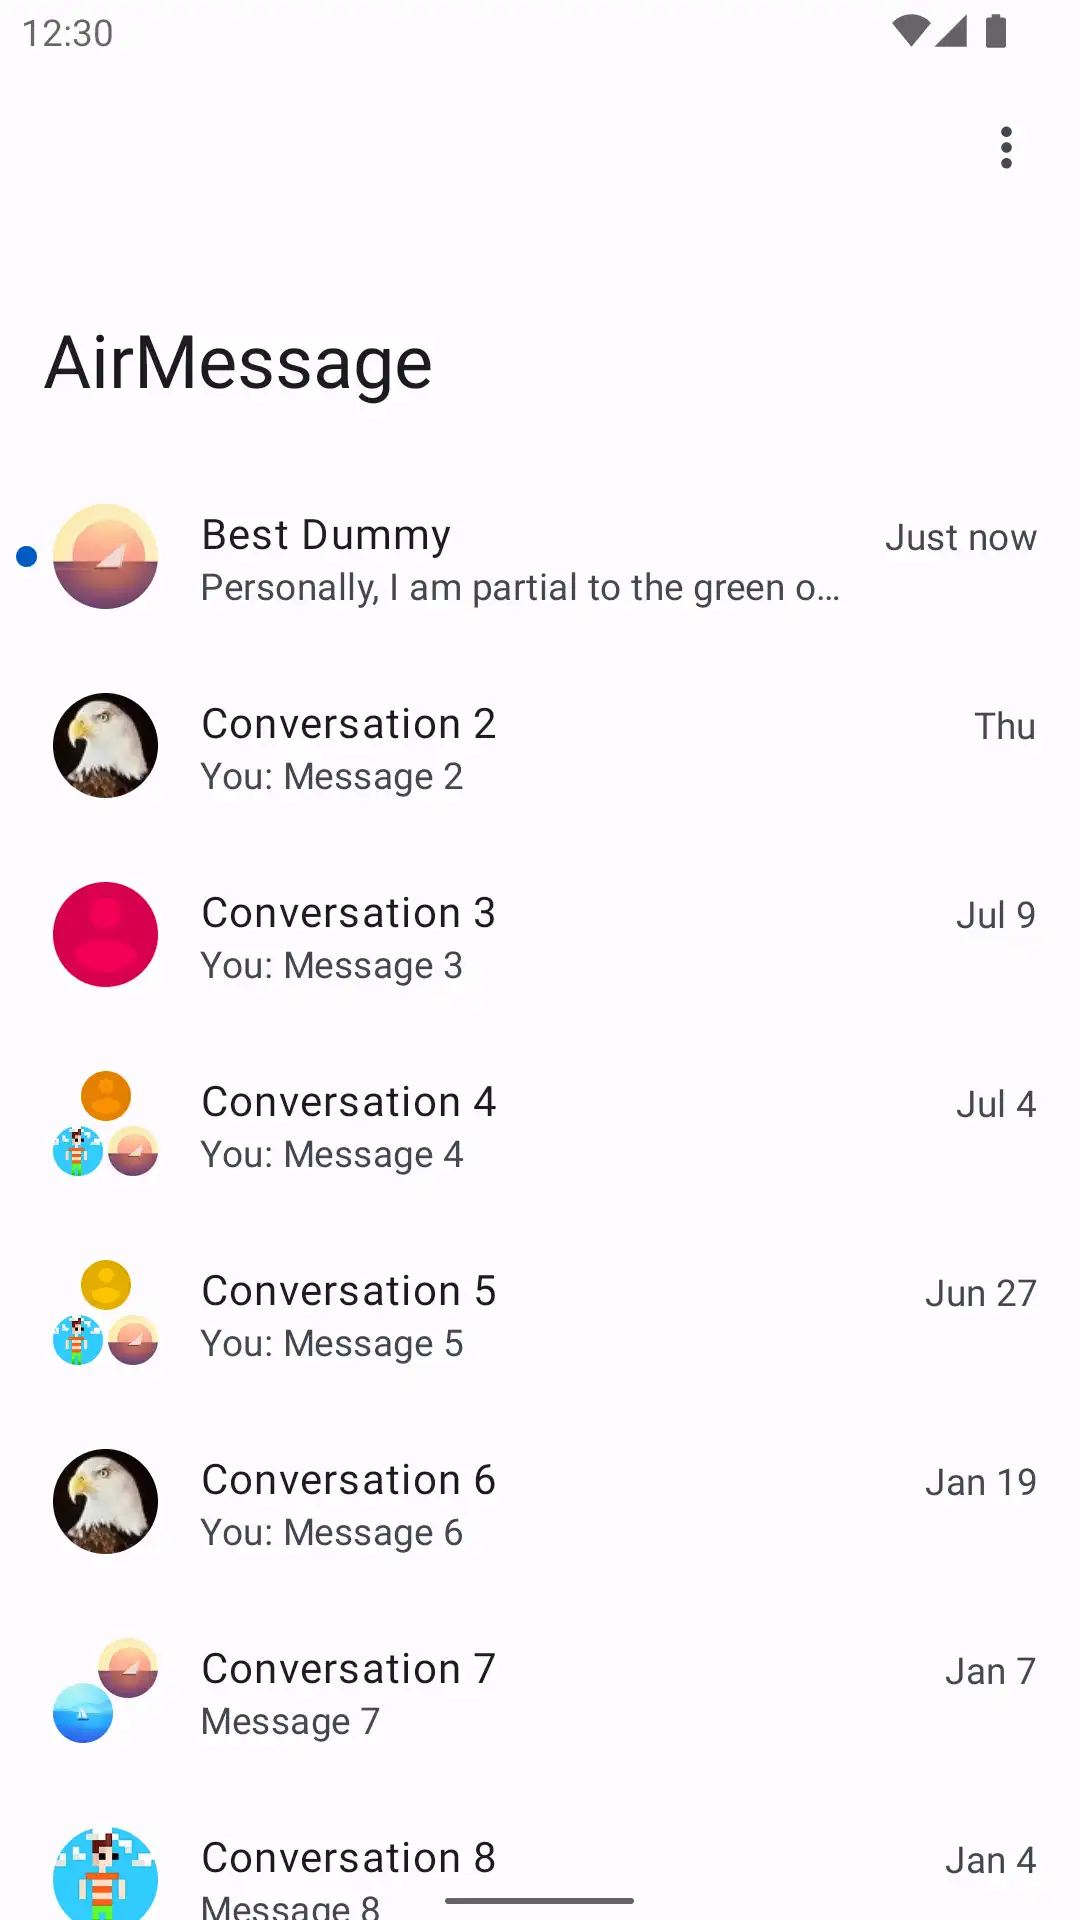 AirMessage's new redesigned conversation list